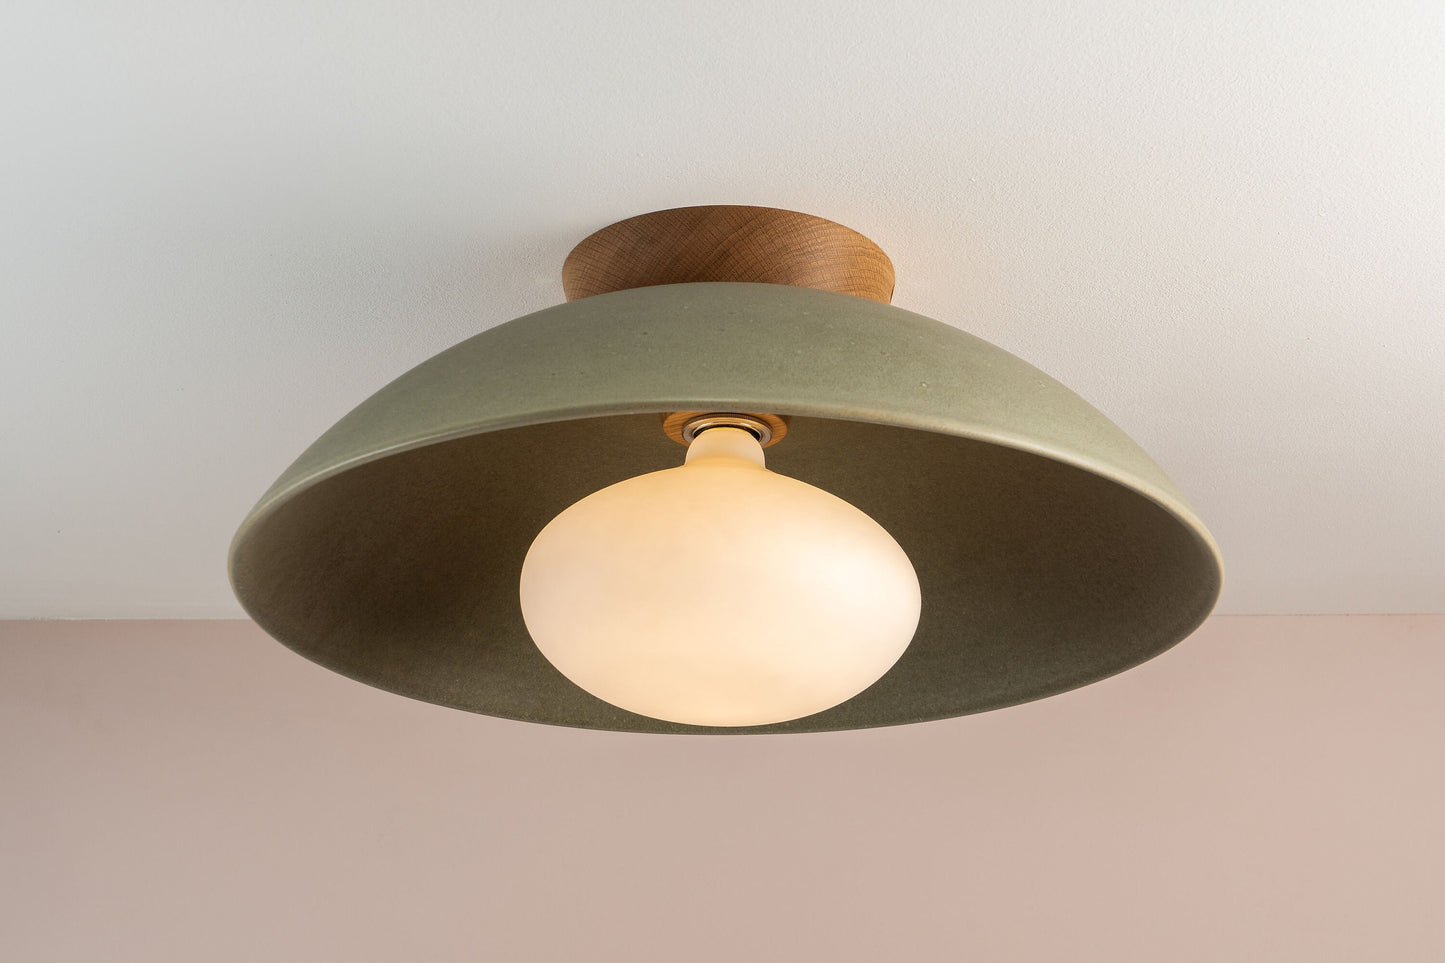 Green XL Dawn Flush Mount Ceiling Light in Ceramic and Oak by StudioHaran